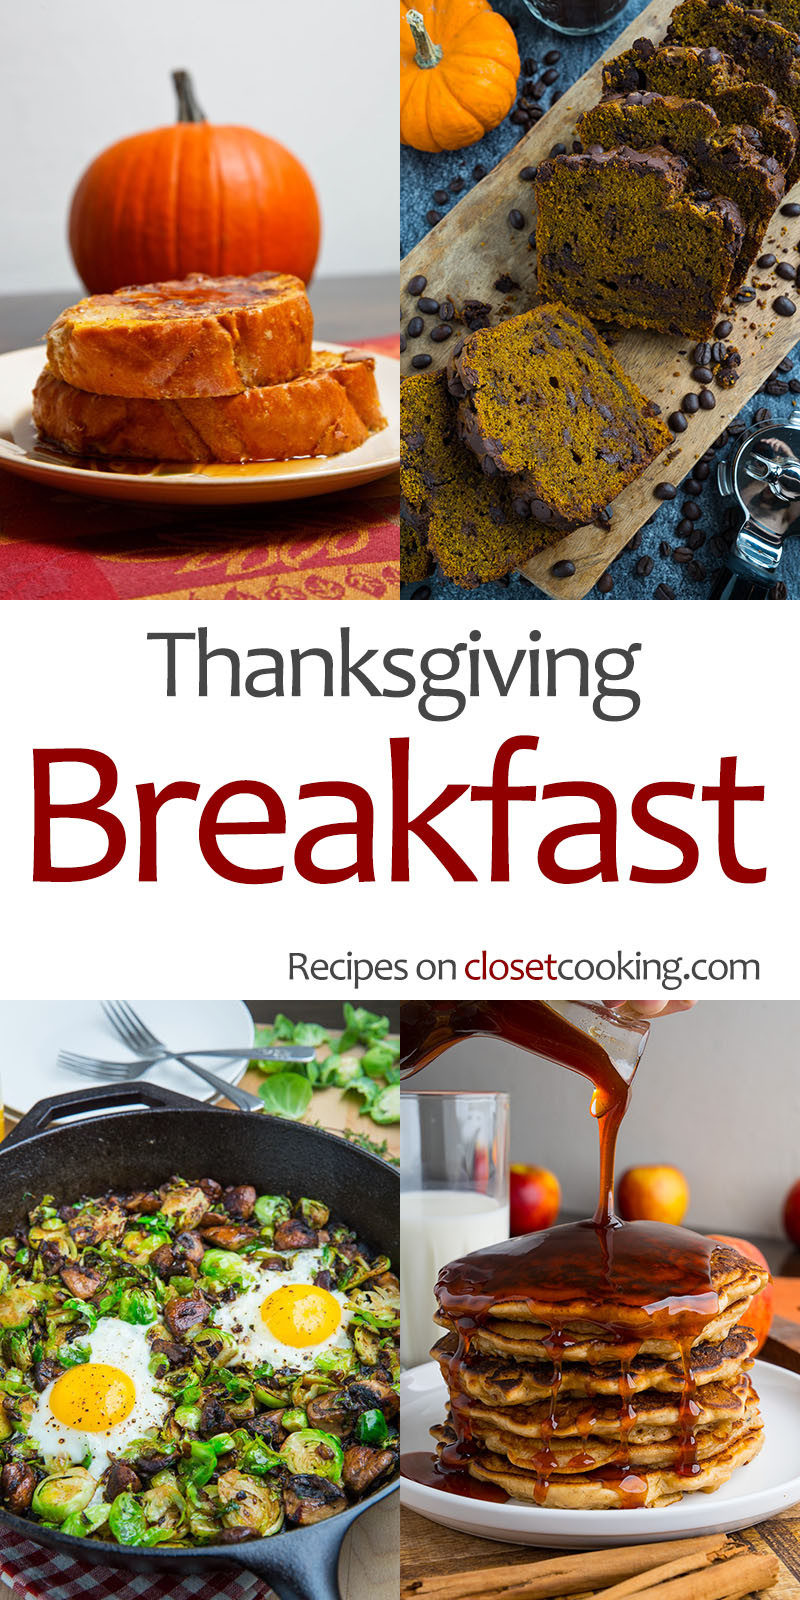 Thanksgiving Breakfast Menu Ideas
 Thanksgiving Breakfast Recipes Closet Cooking